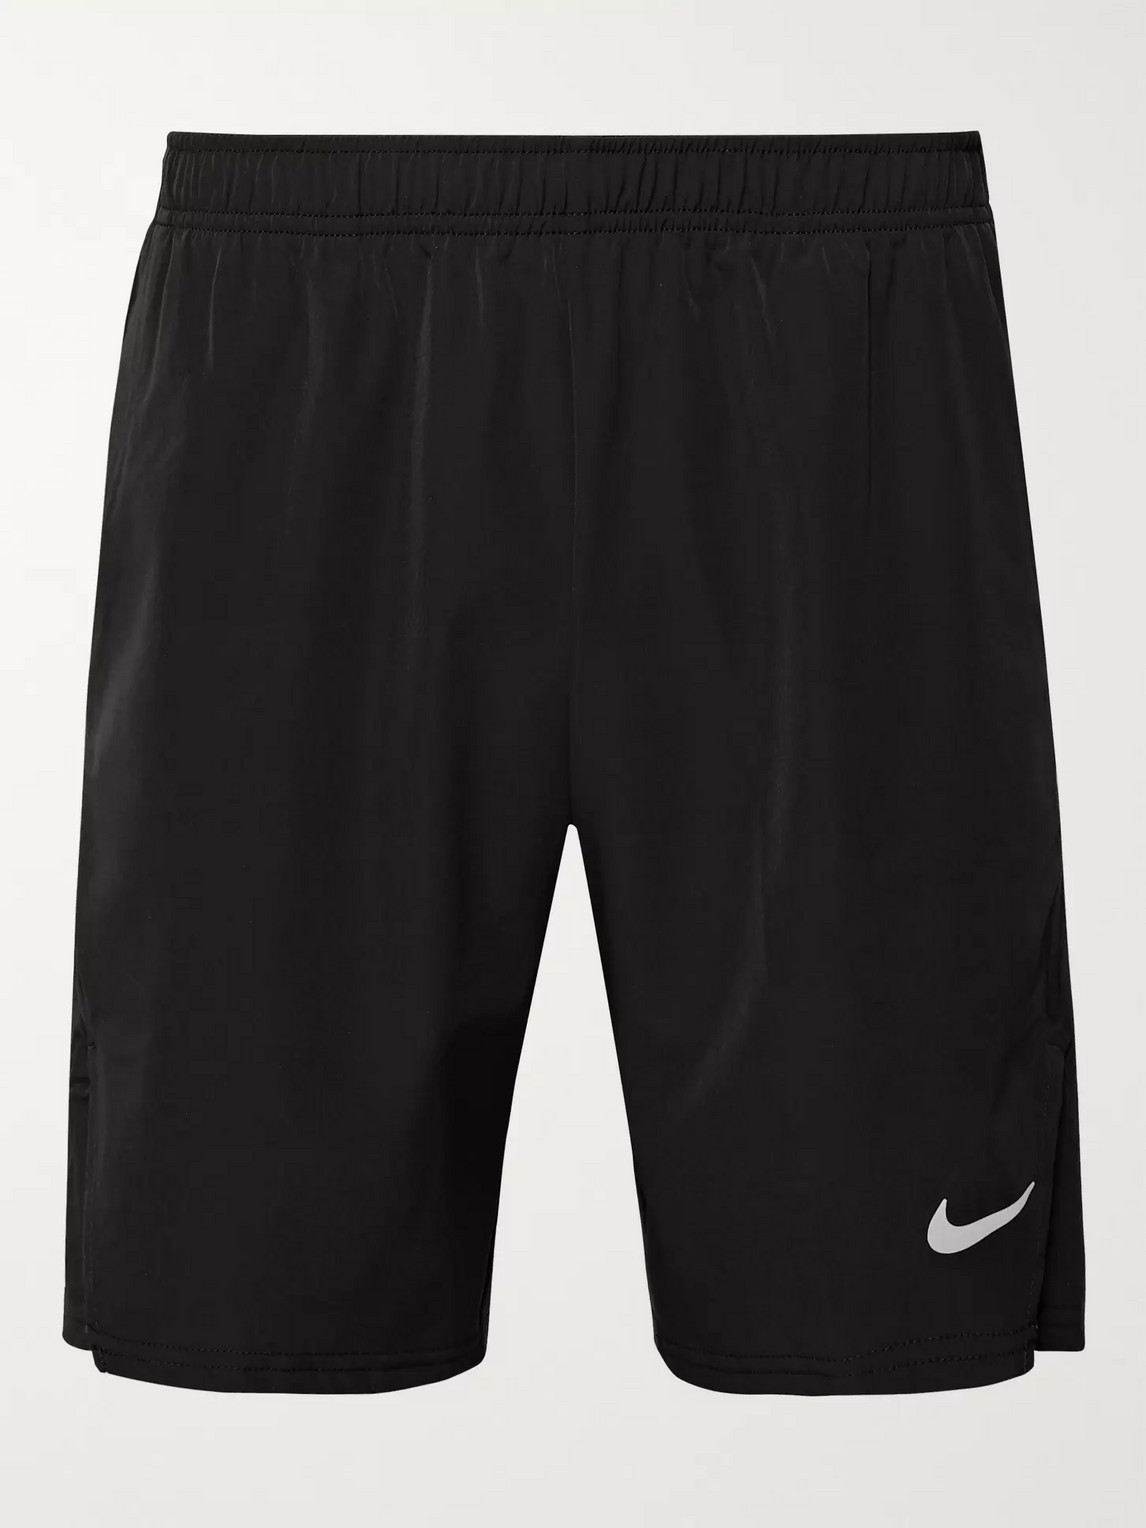 Nike Court Flex Ace Dri-fit Tennis Shorts In Black